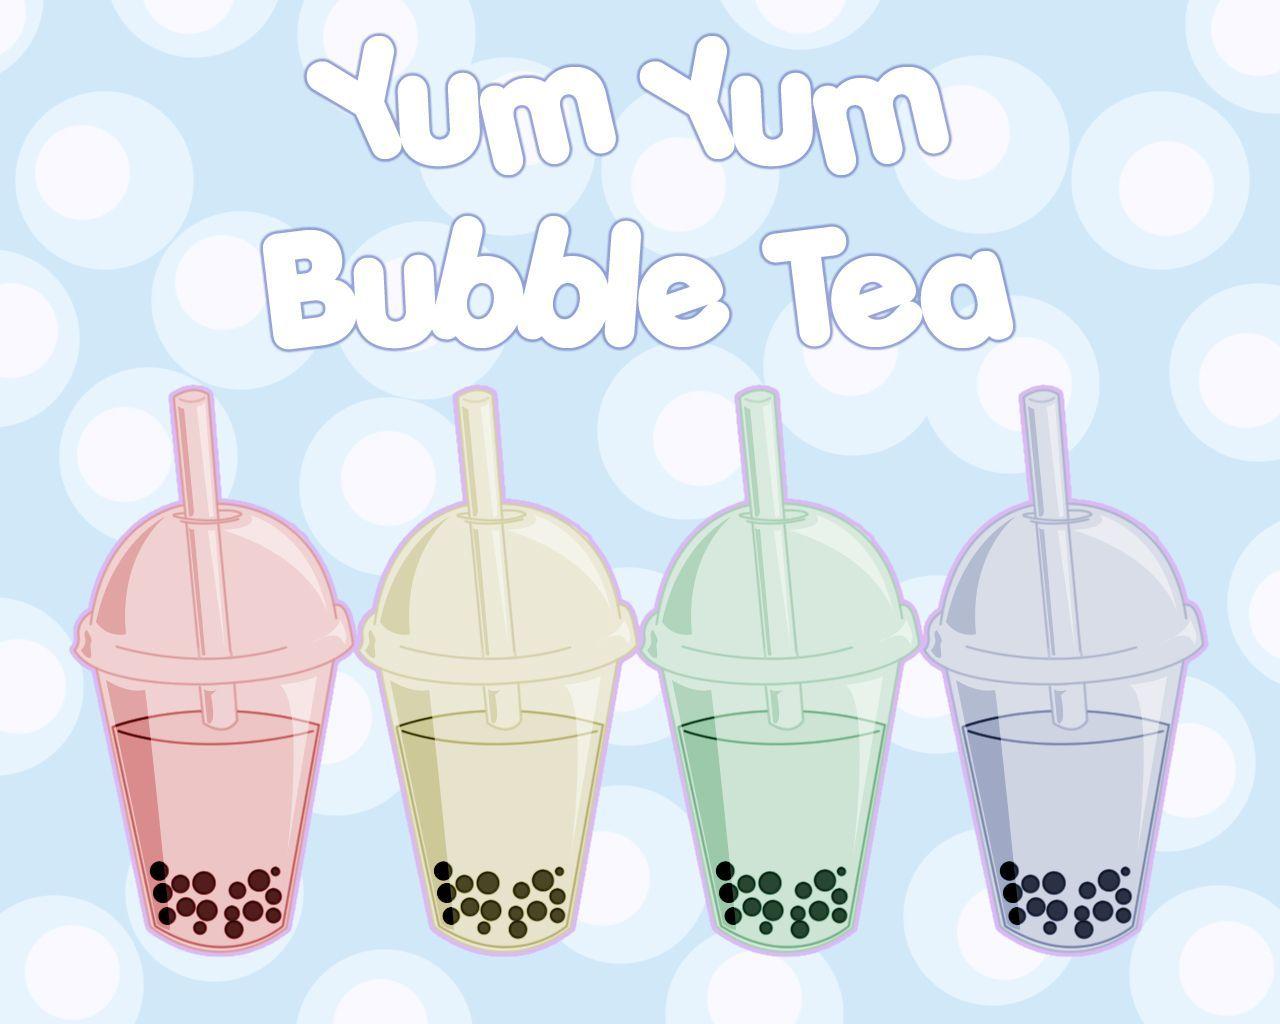 yum tum bubble tea. milk tea and taro are the best for sure! mmmmm